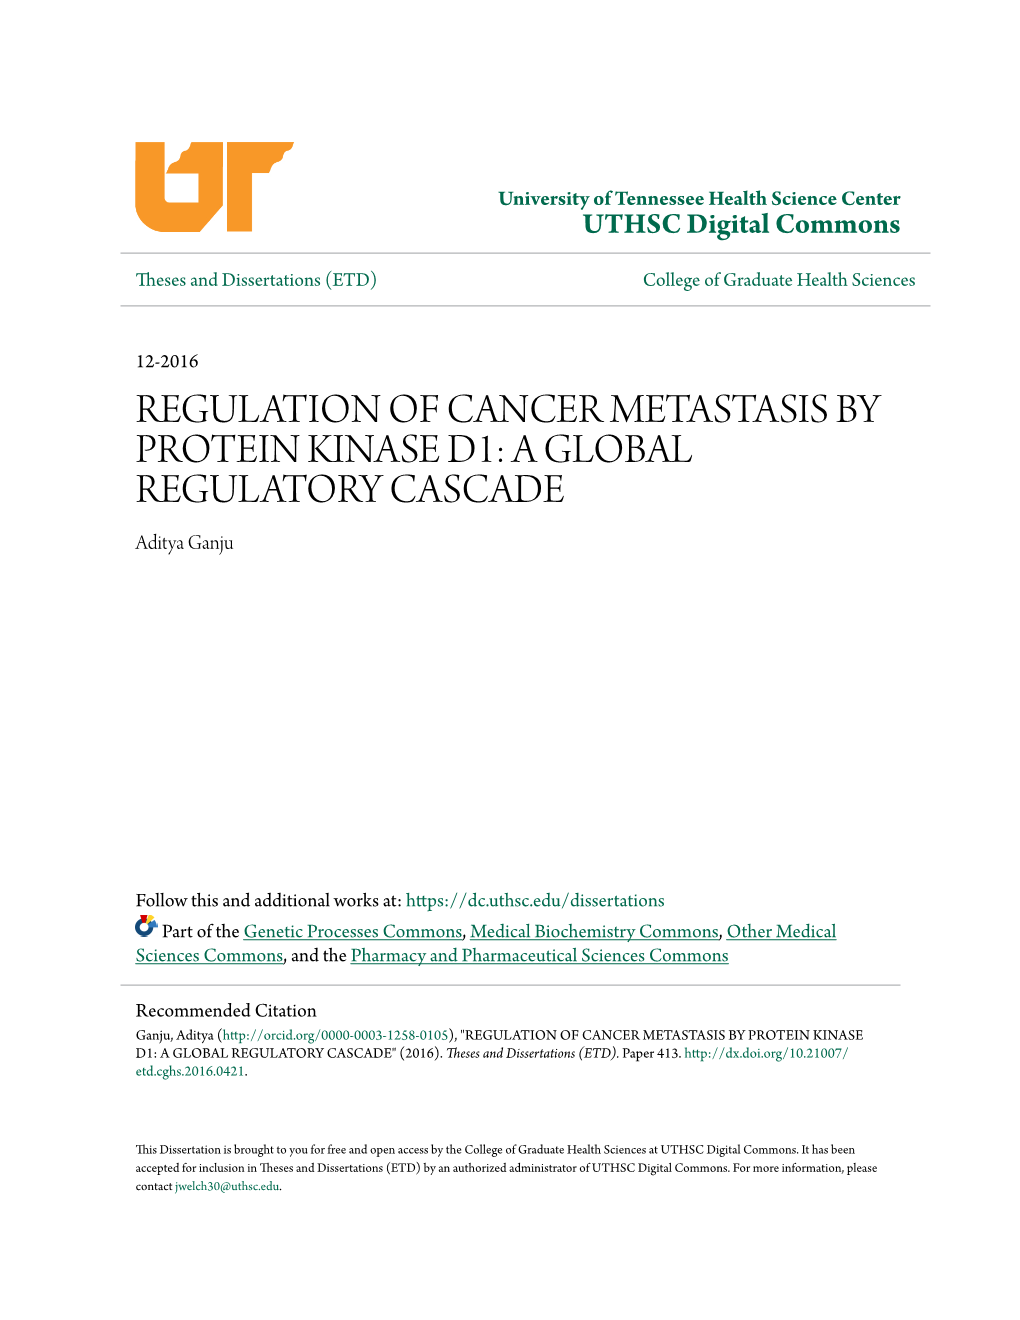 REGULATION of CANCER METASTASIS by PROTEIN KINASE D1: a GLOBAL REGULATORY CASCADE Aditya Ganju